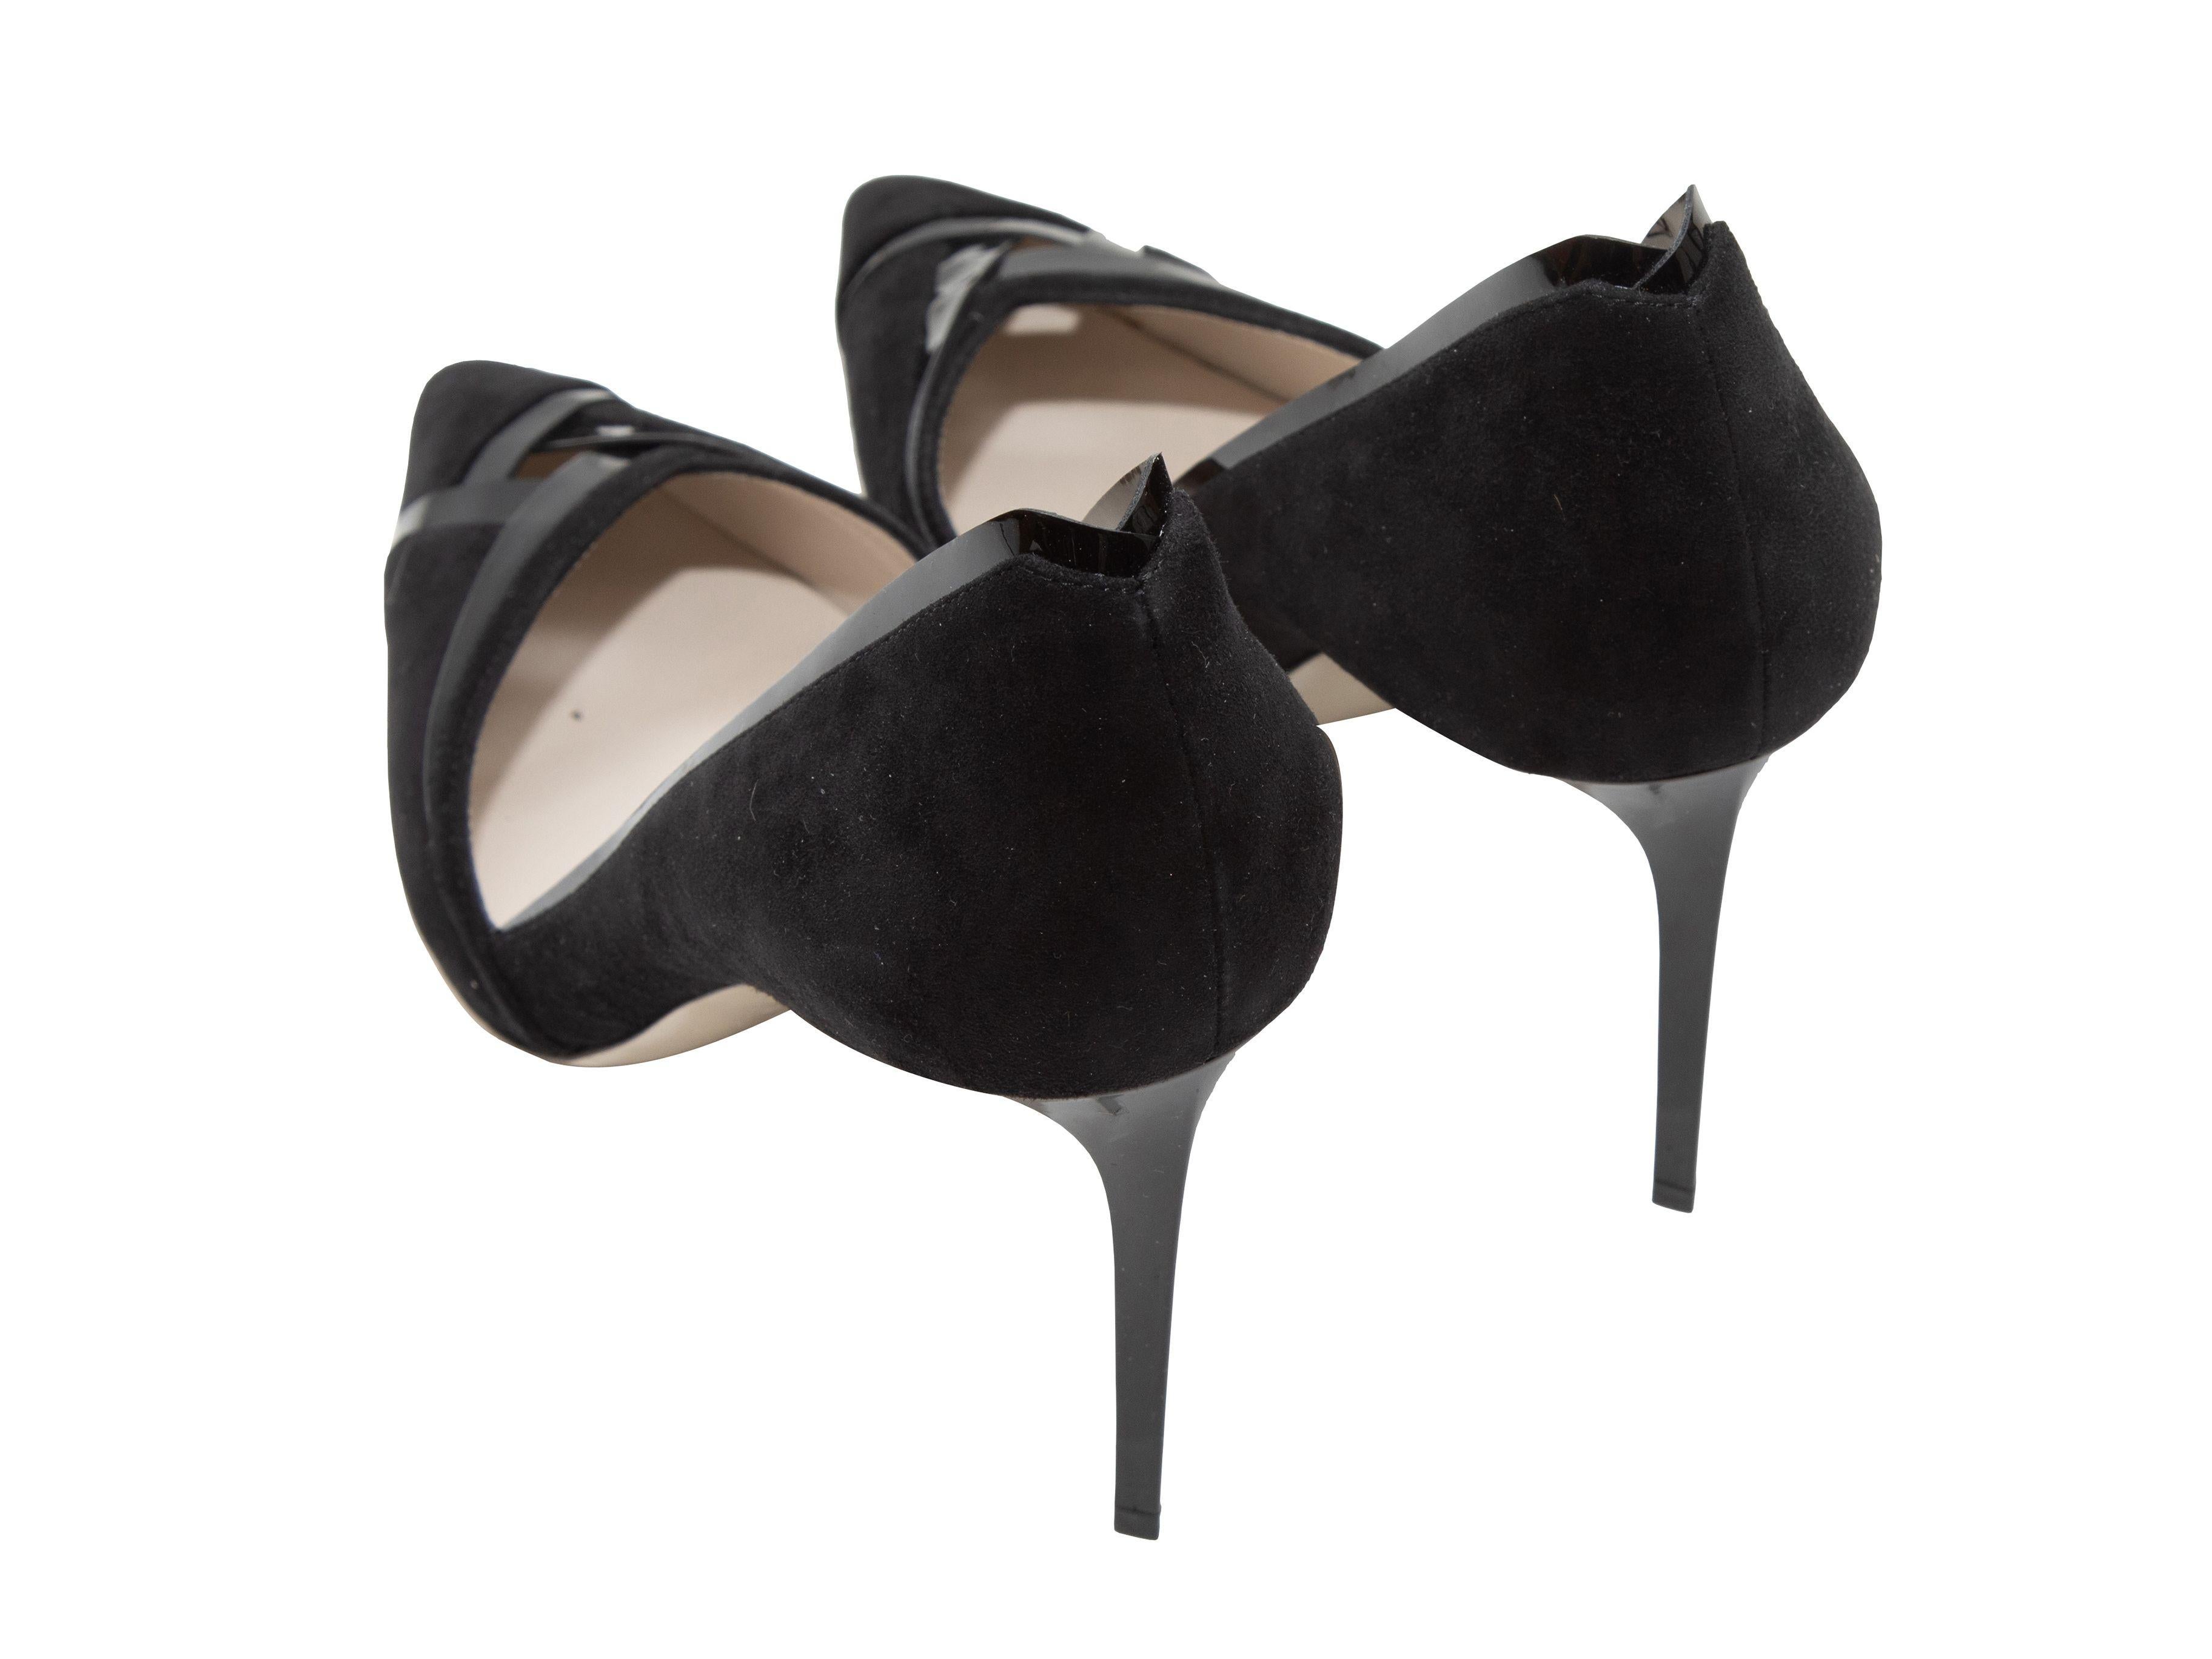 Women's Giorgio Armani Black Suede & Patent Leather Pointed-Toe Pumps